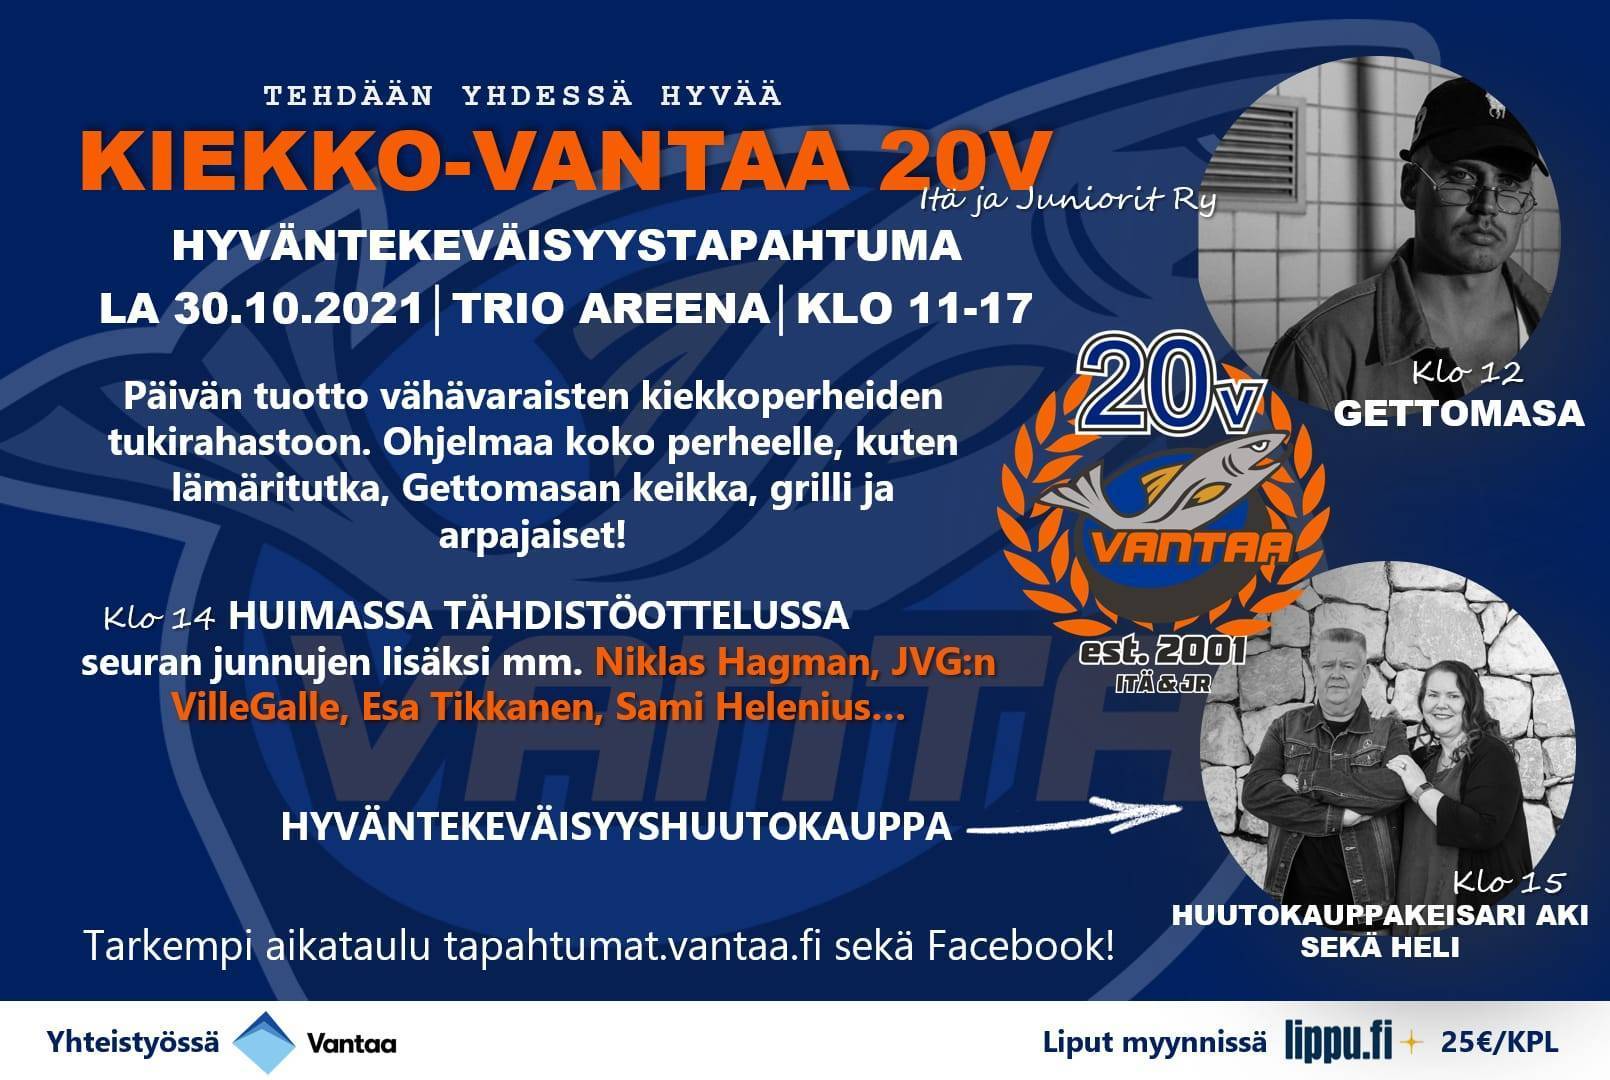 Kiekko-Vantaa juniorit 20v. juhlat Trio Areenalla 30.10. klo 11-17